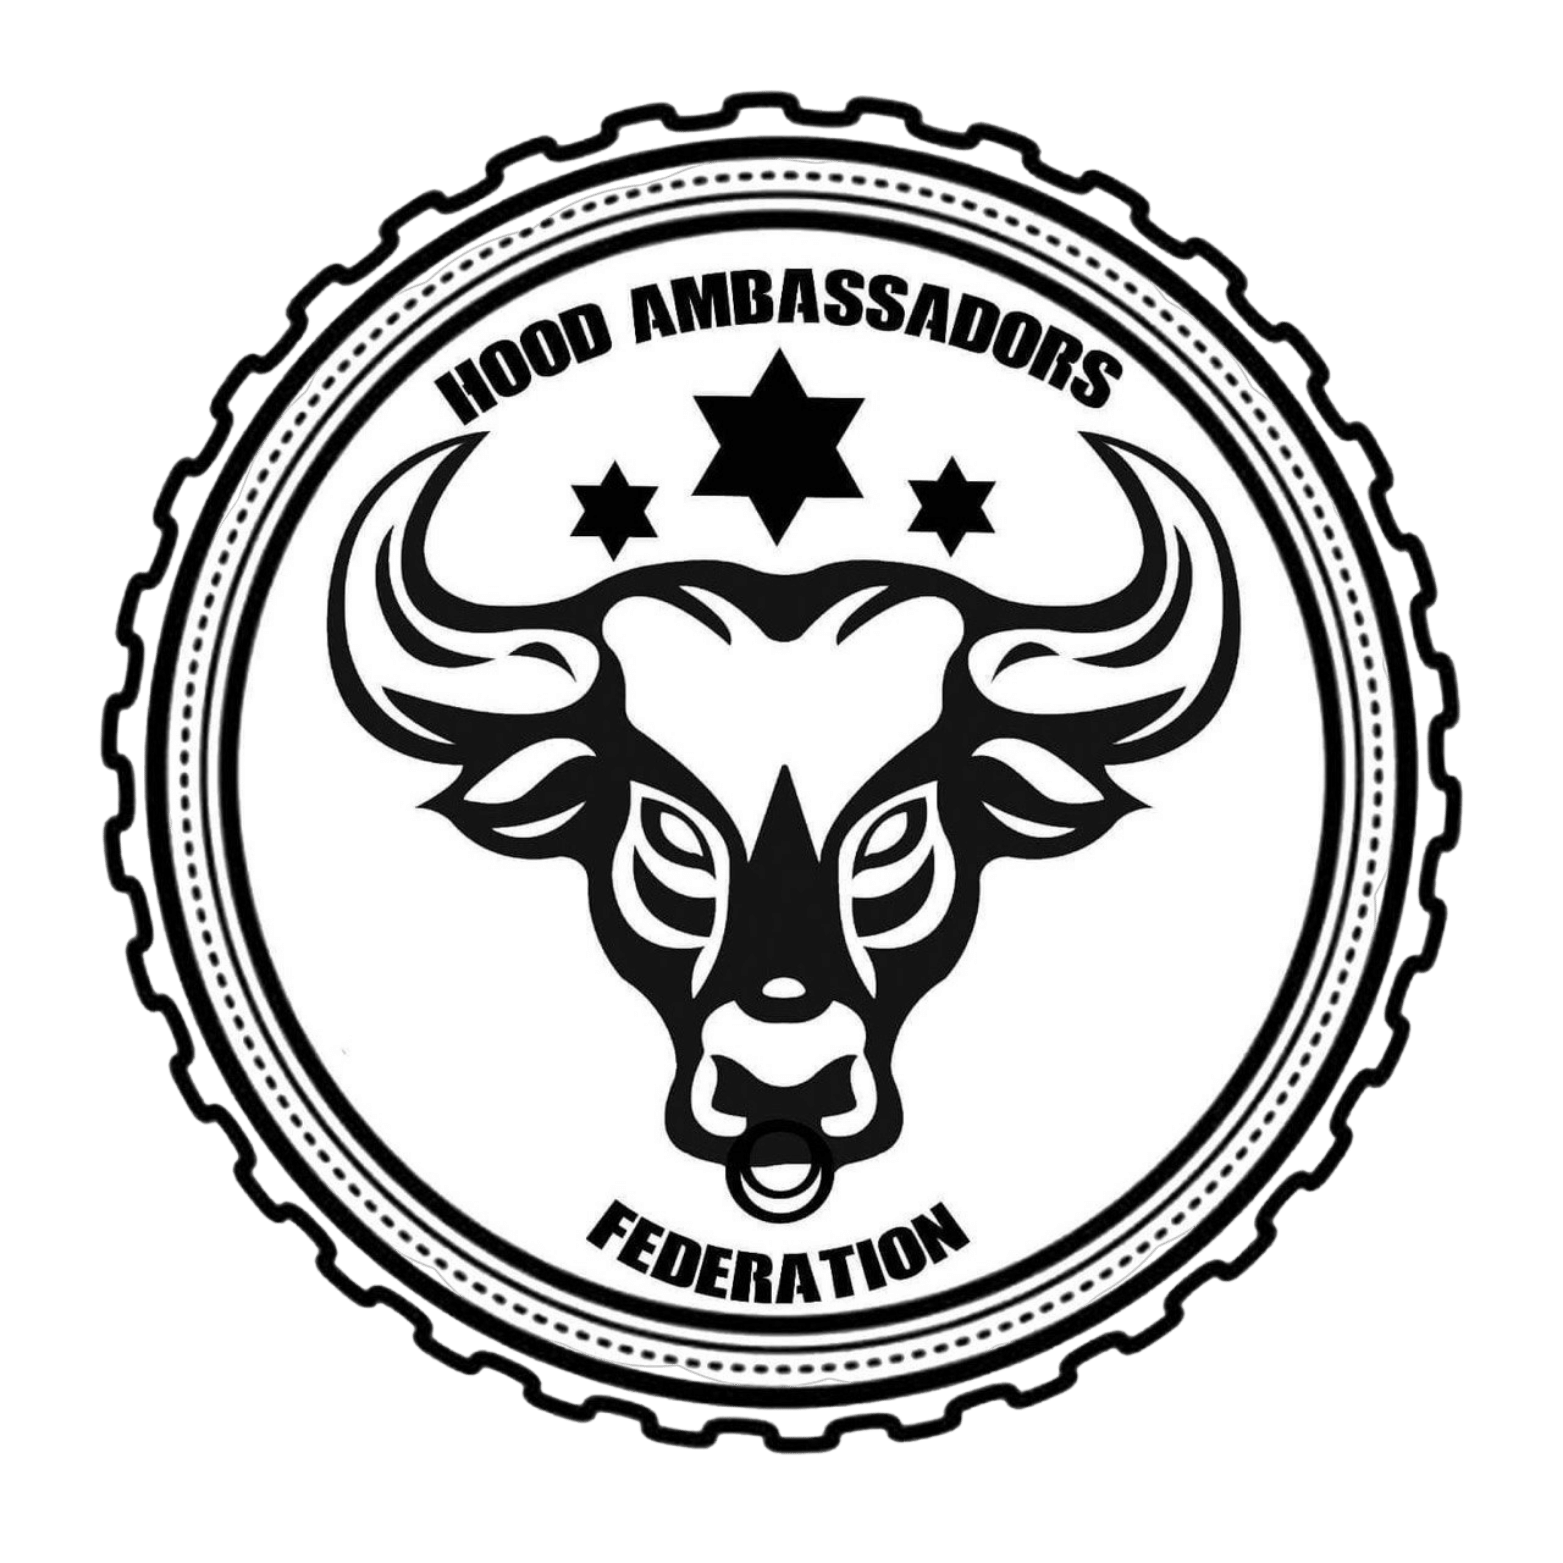 Hood Ambassadors Federation